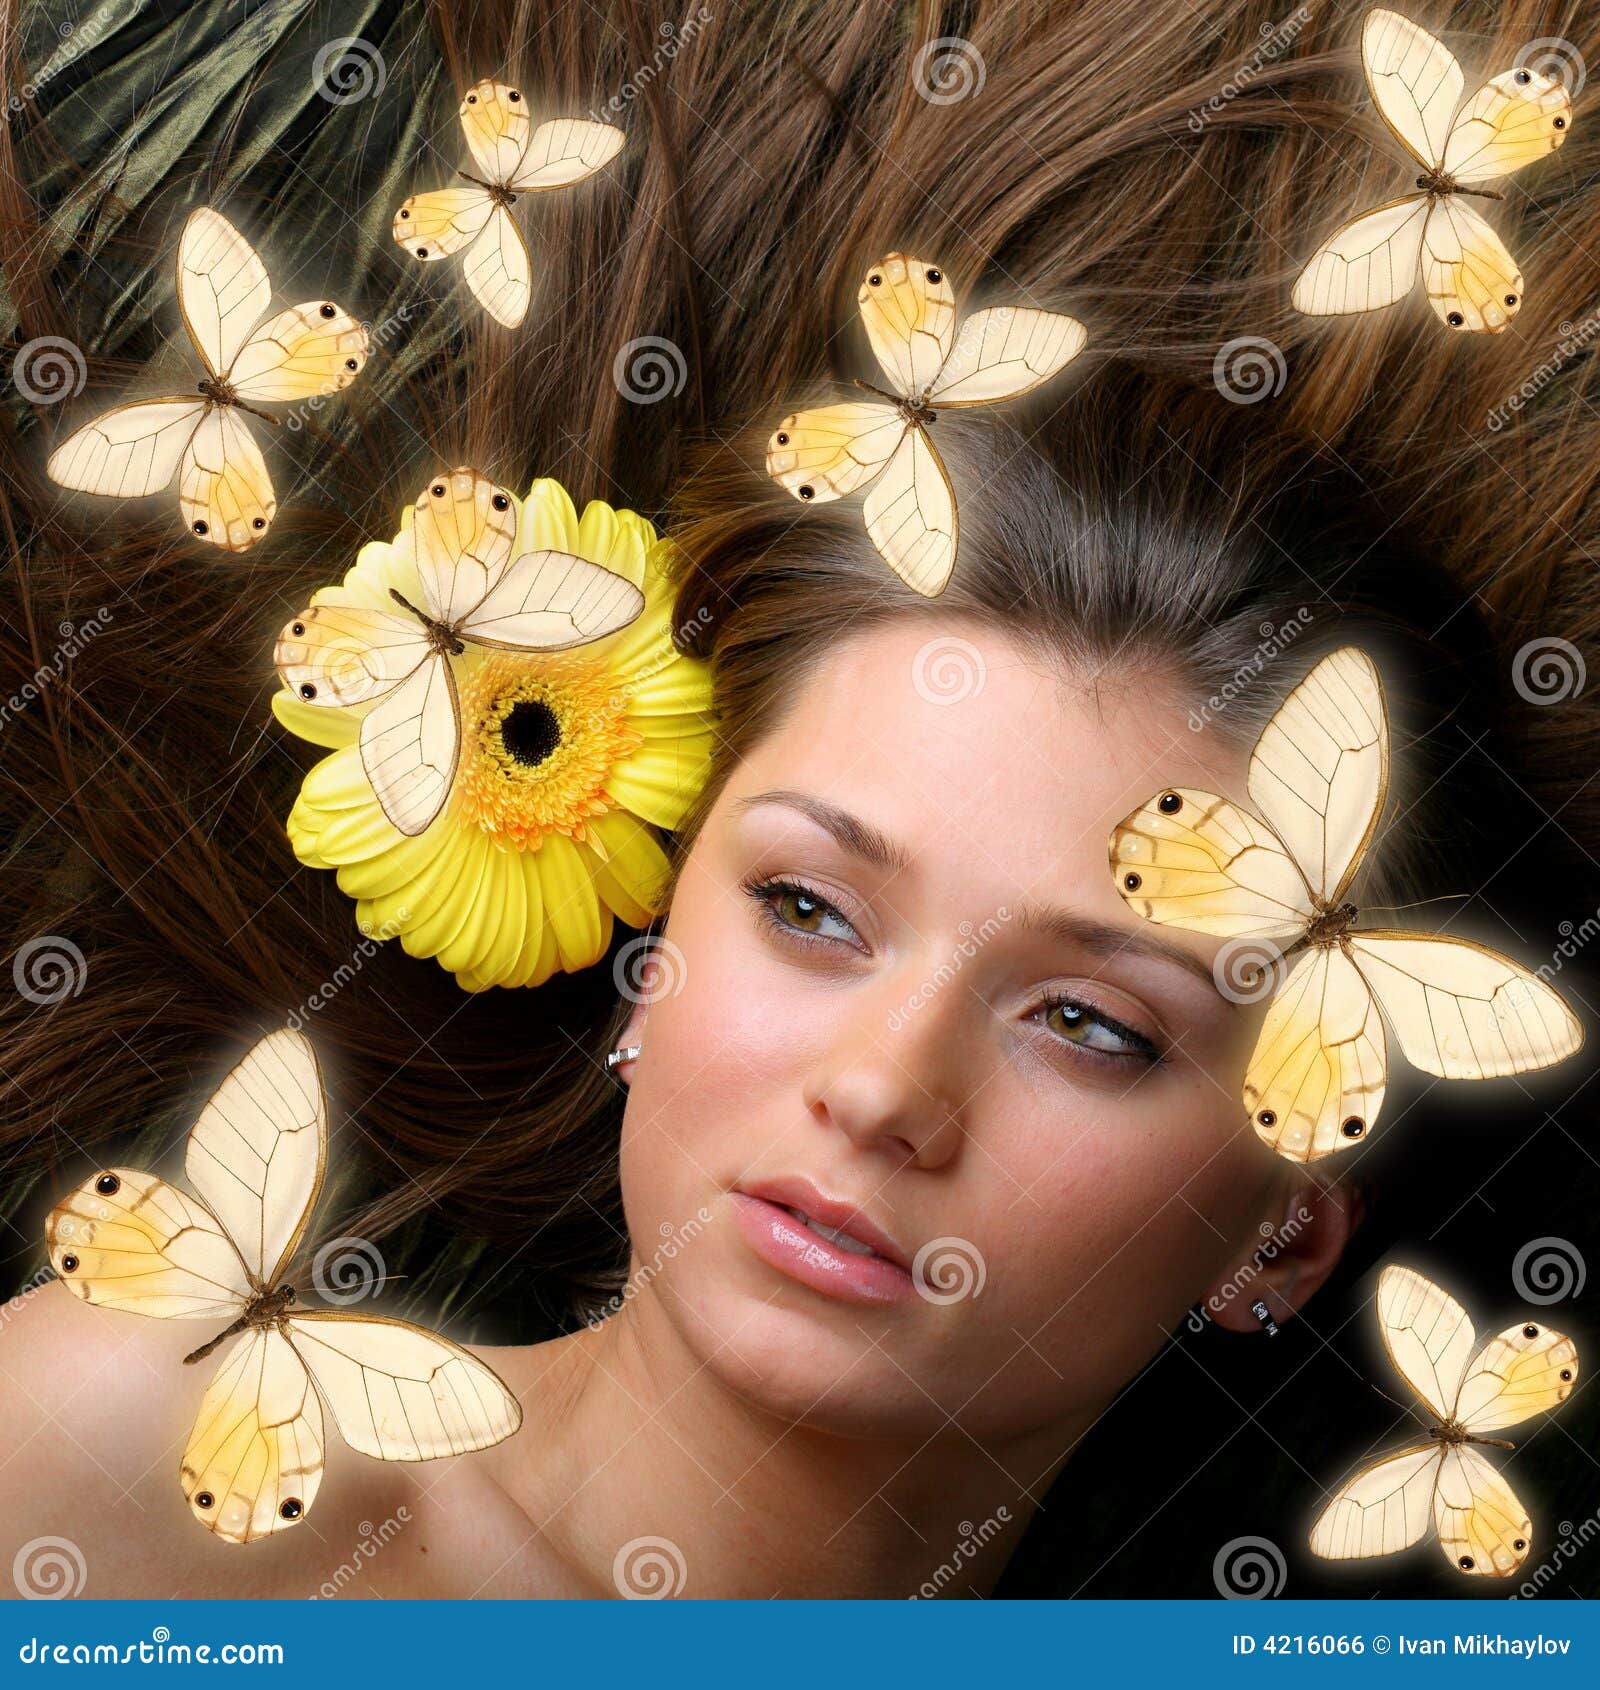 <b>Butterfly girl</b> - butterfly-girl-4216066